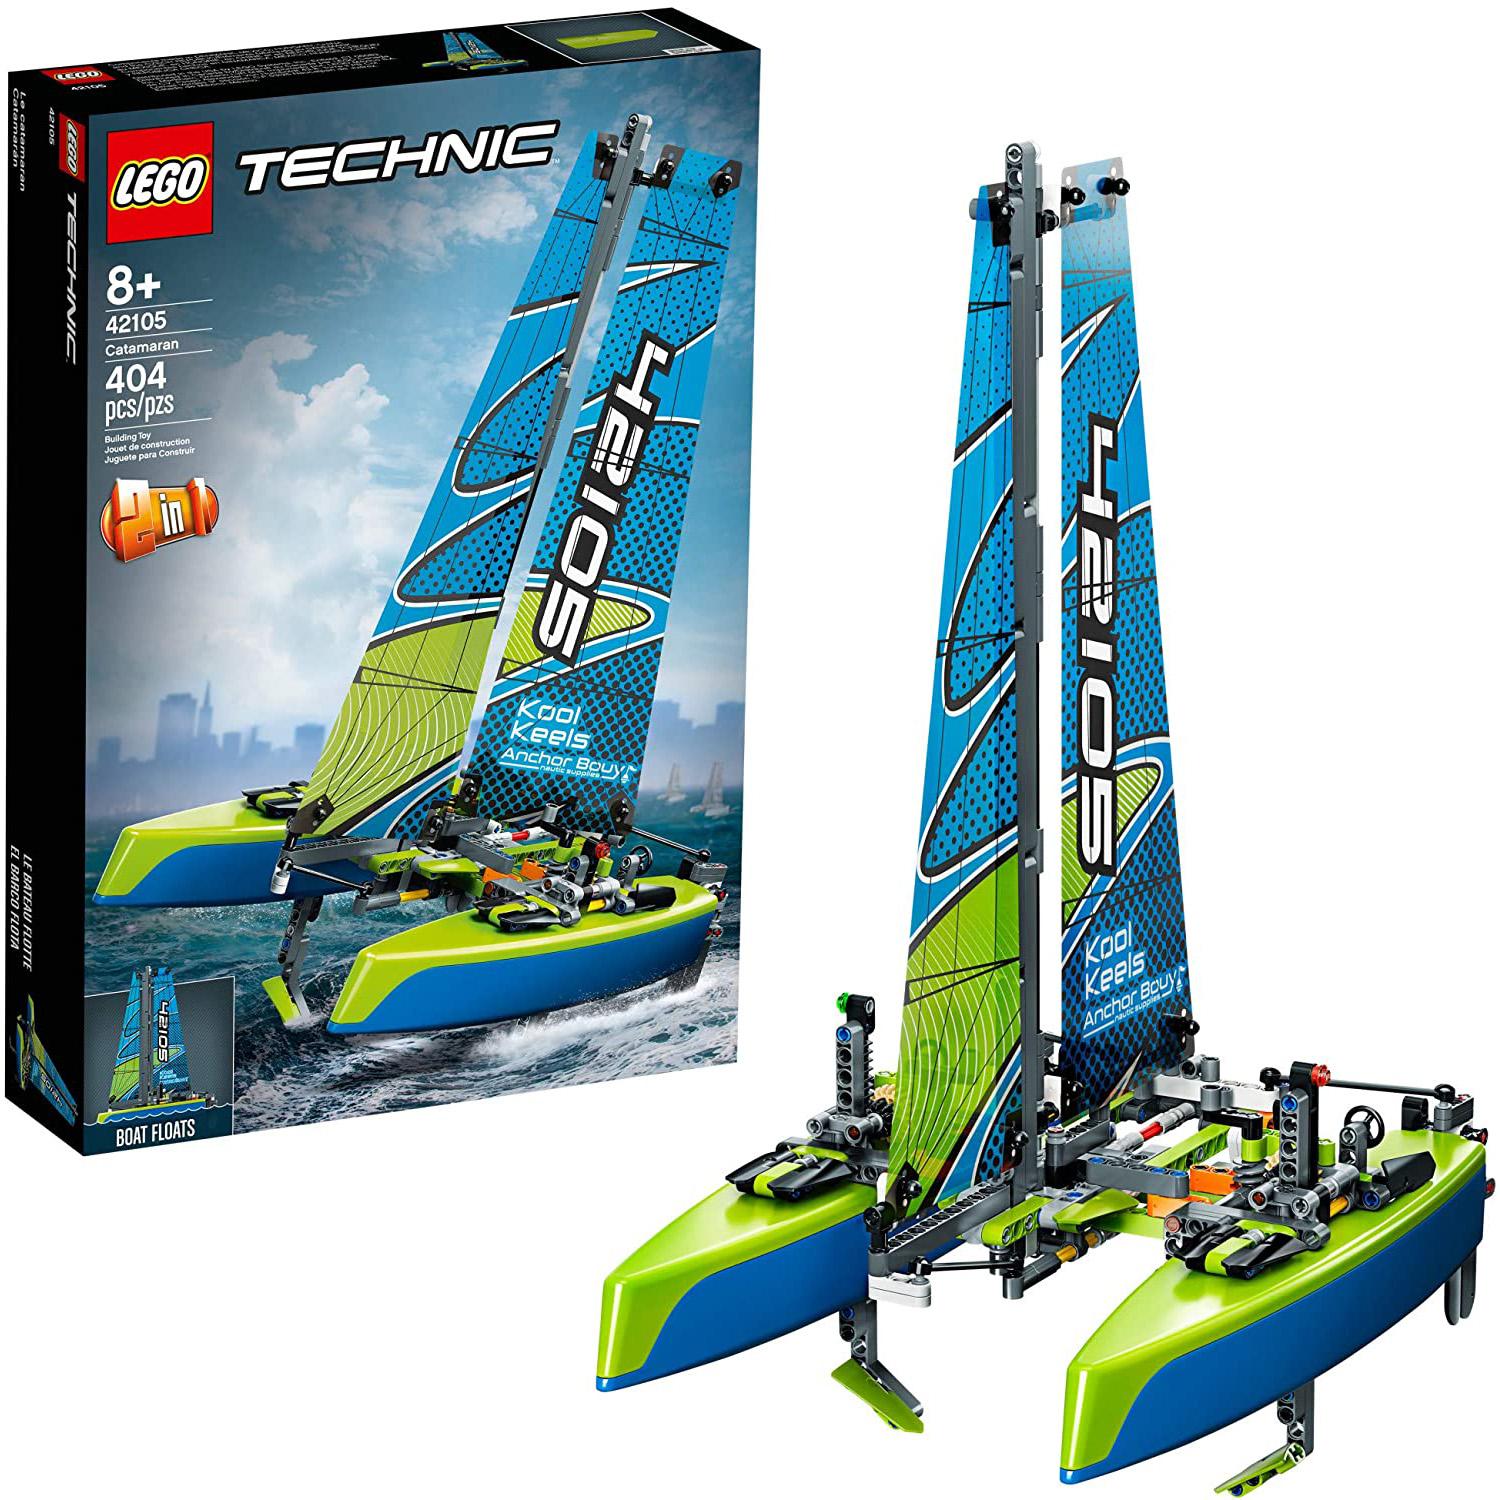 LEGO Technic Catamaran 42105 for $39.99 Shipped